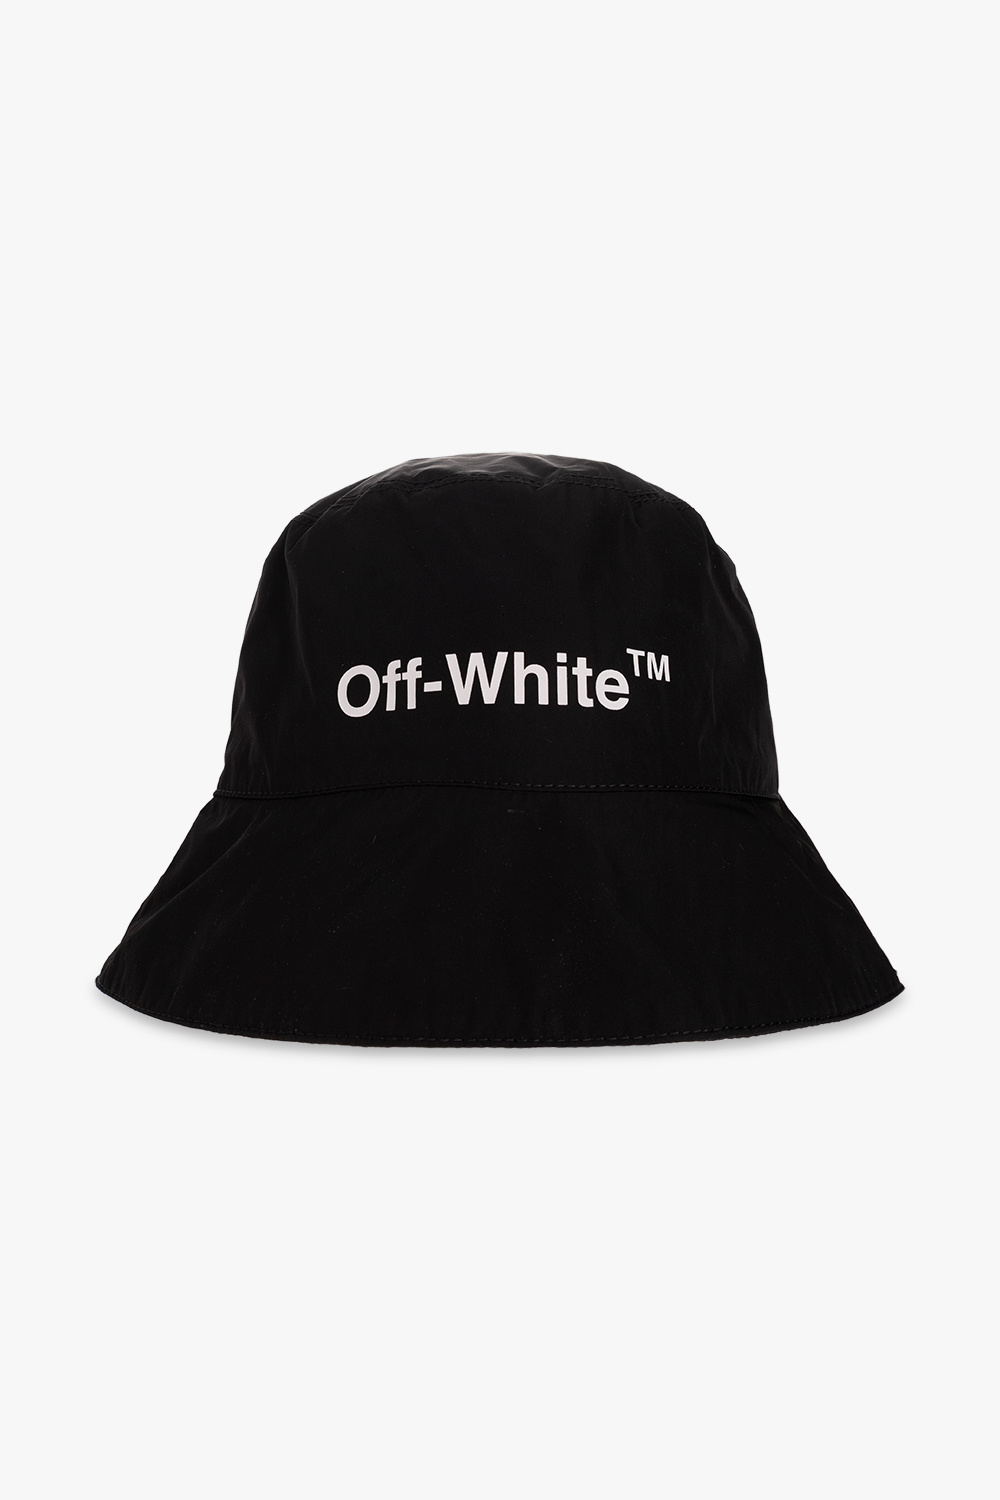 Off-White Bucket Orlando hat with logo